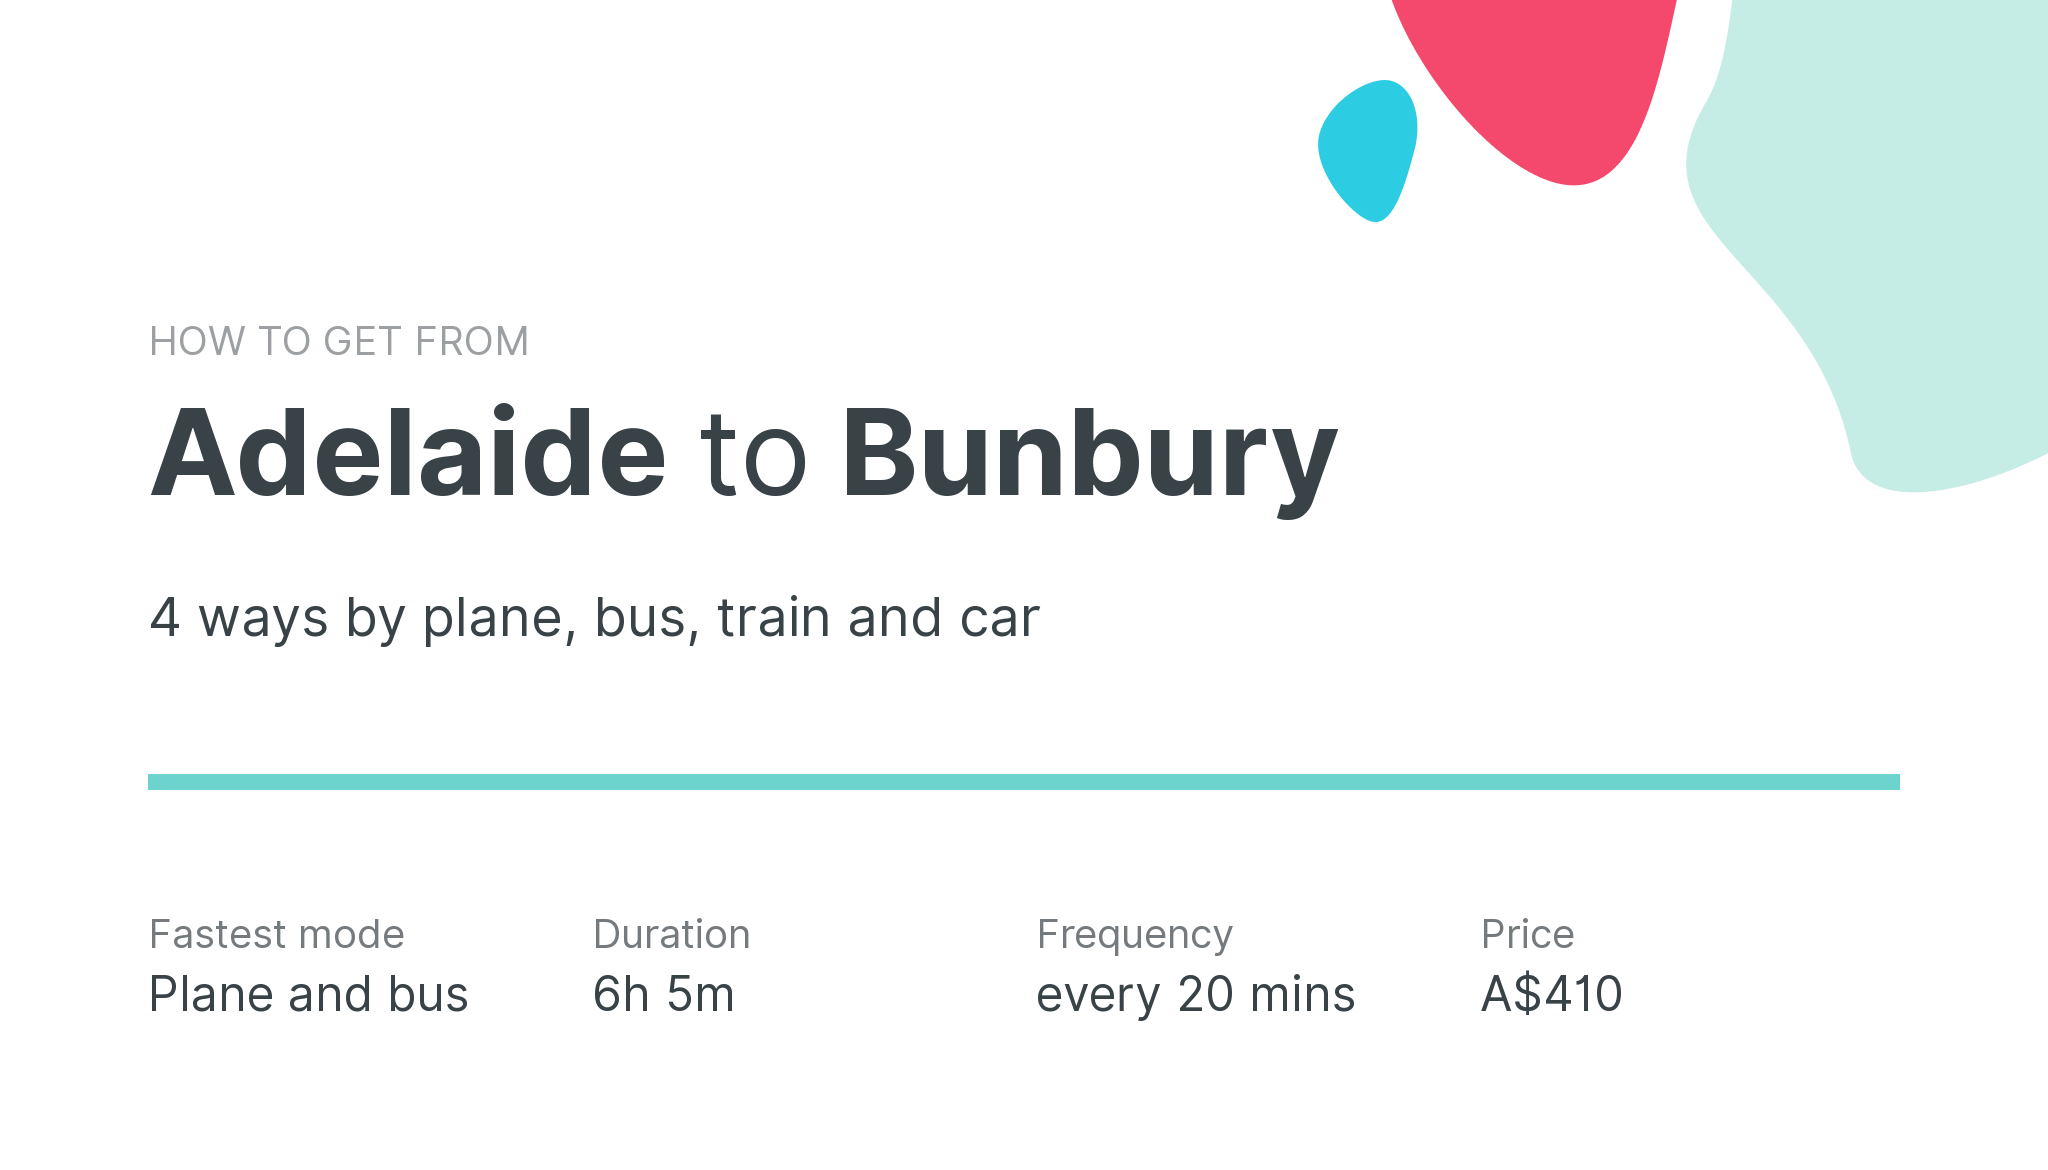 How do I get from Adelaide to Bunbury